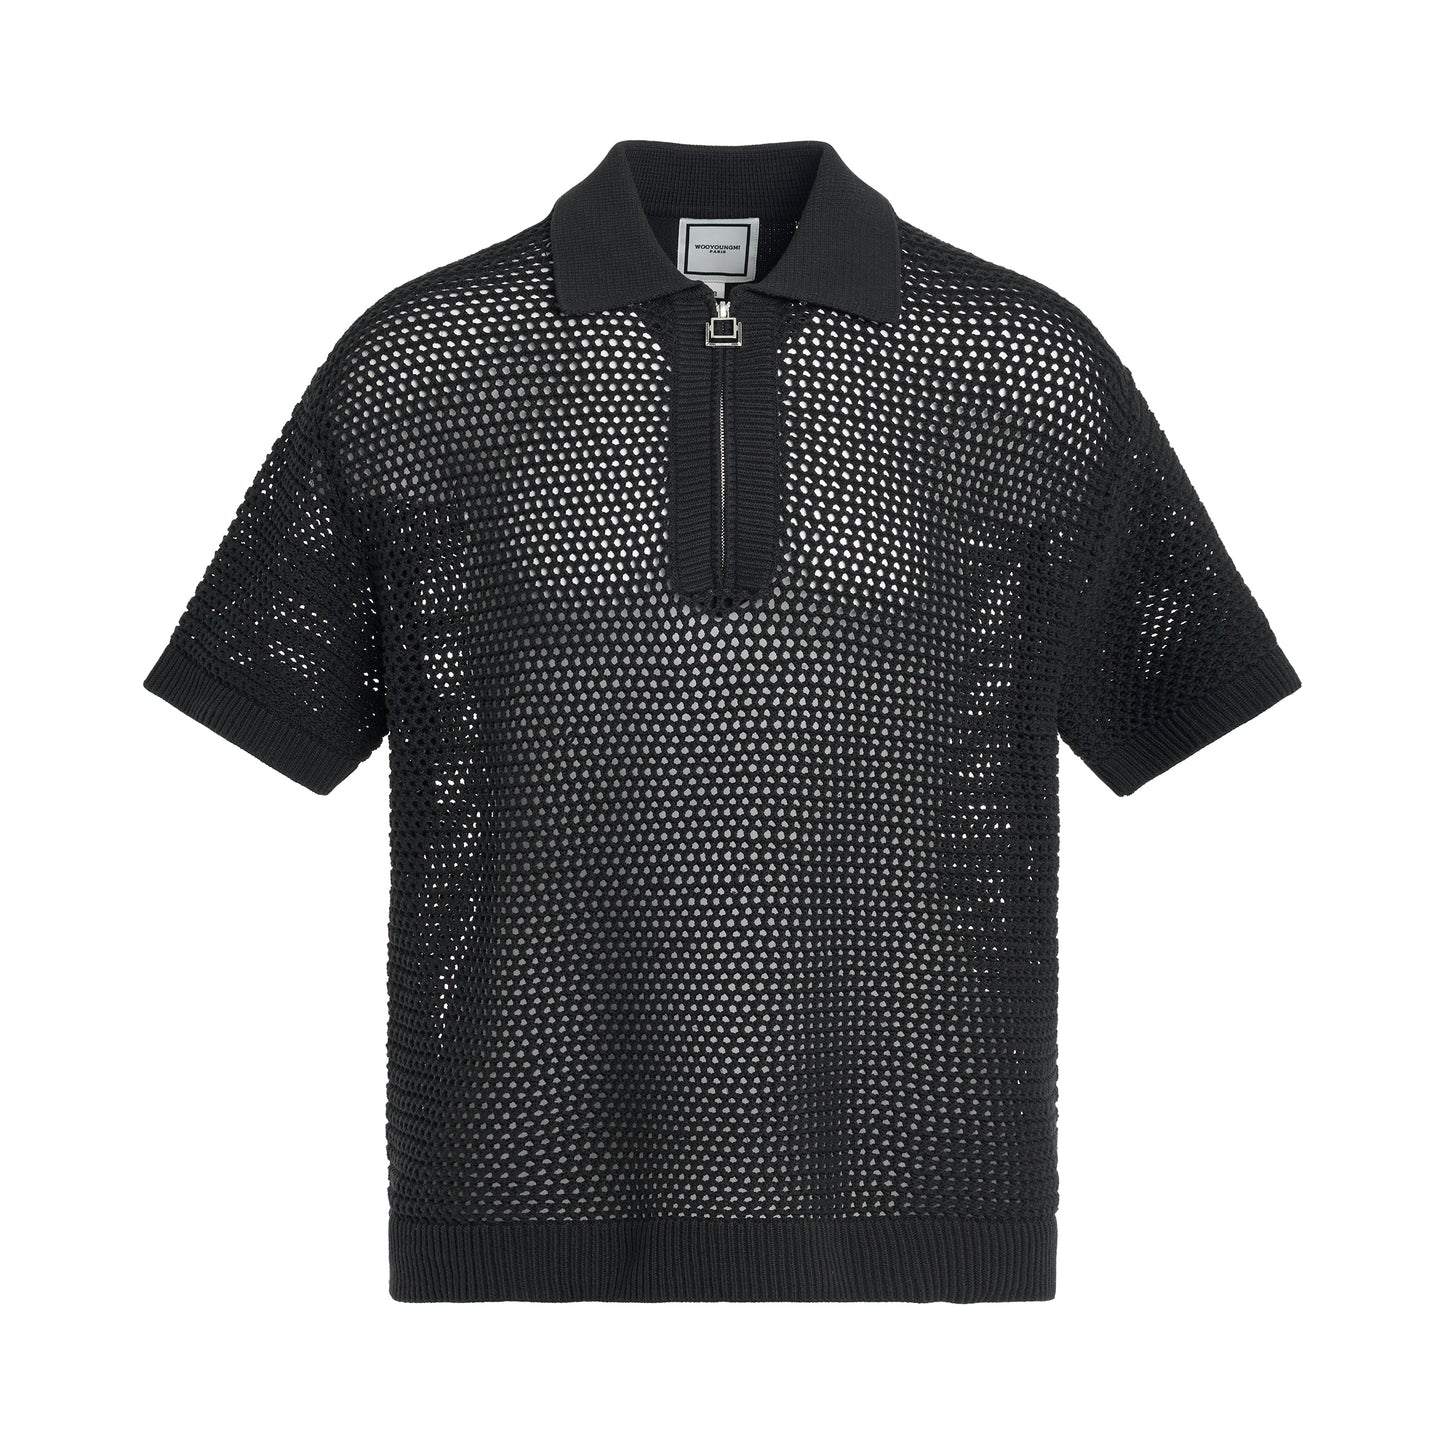 Quarter Zip Knitted Shirt in Black